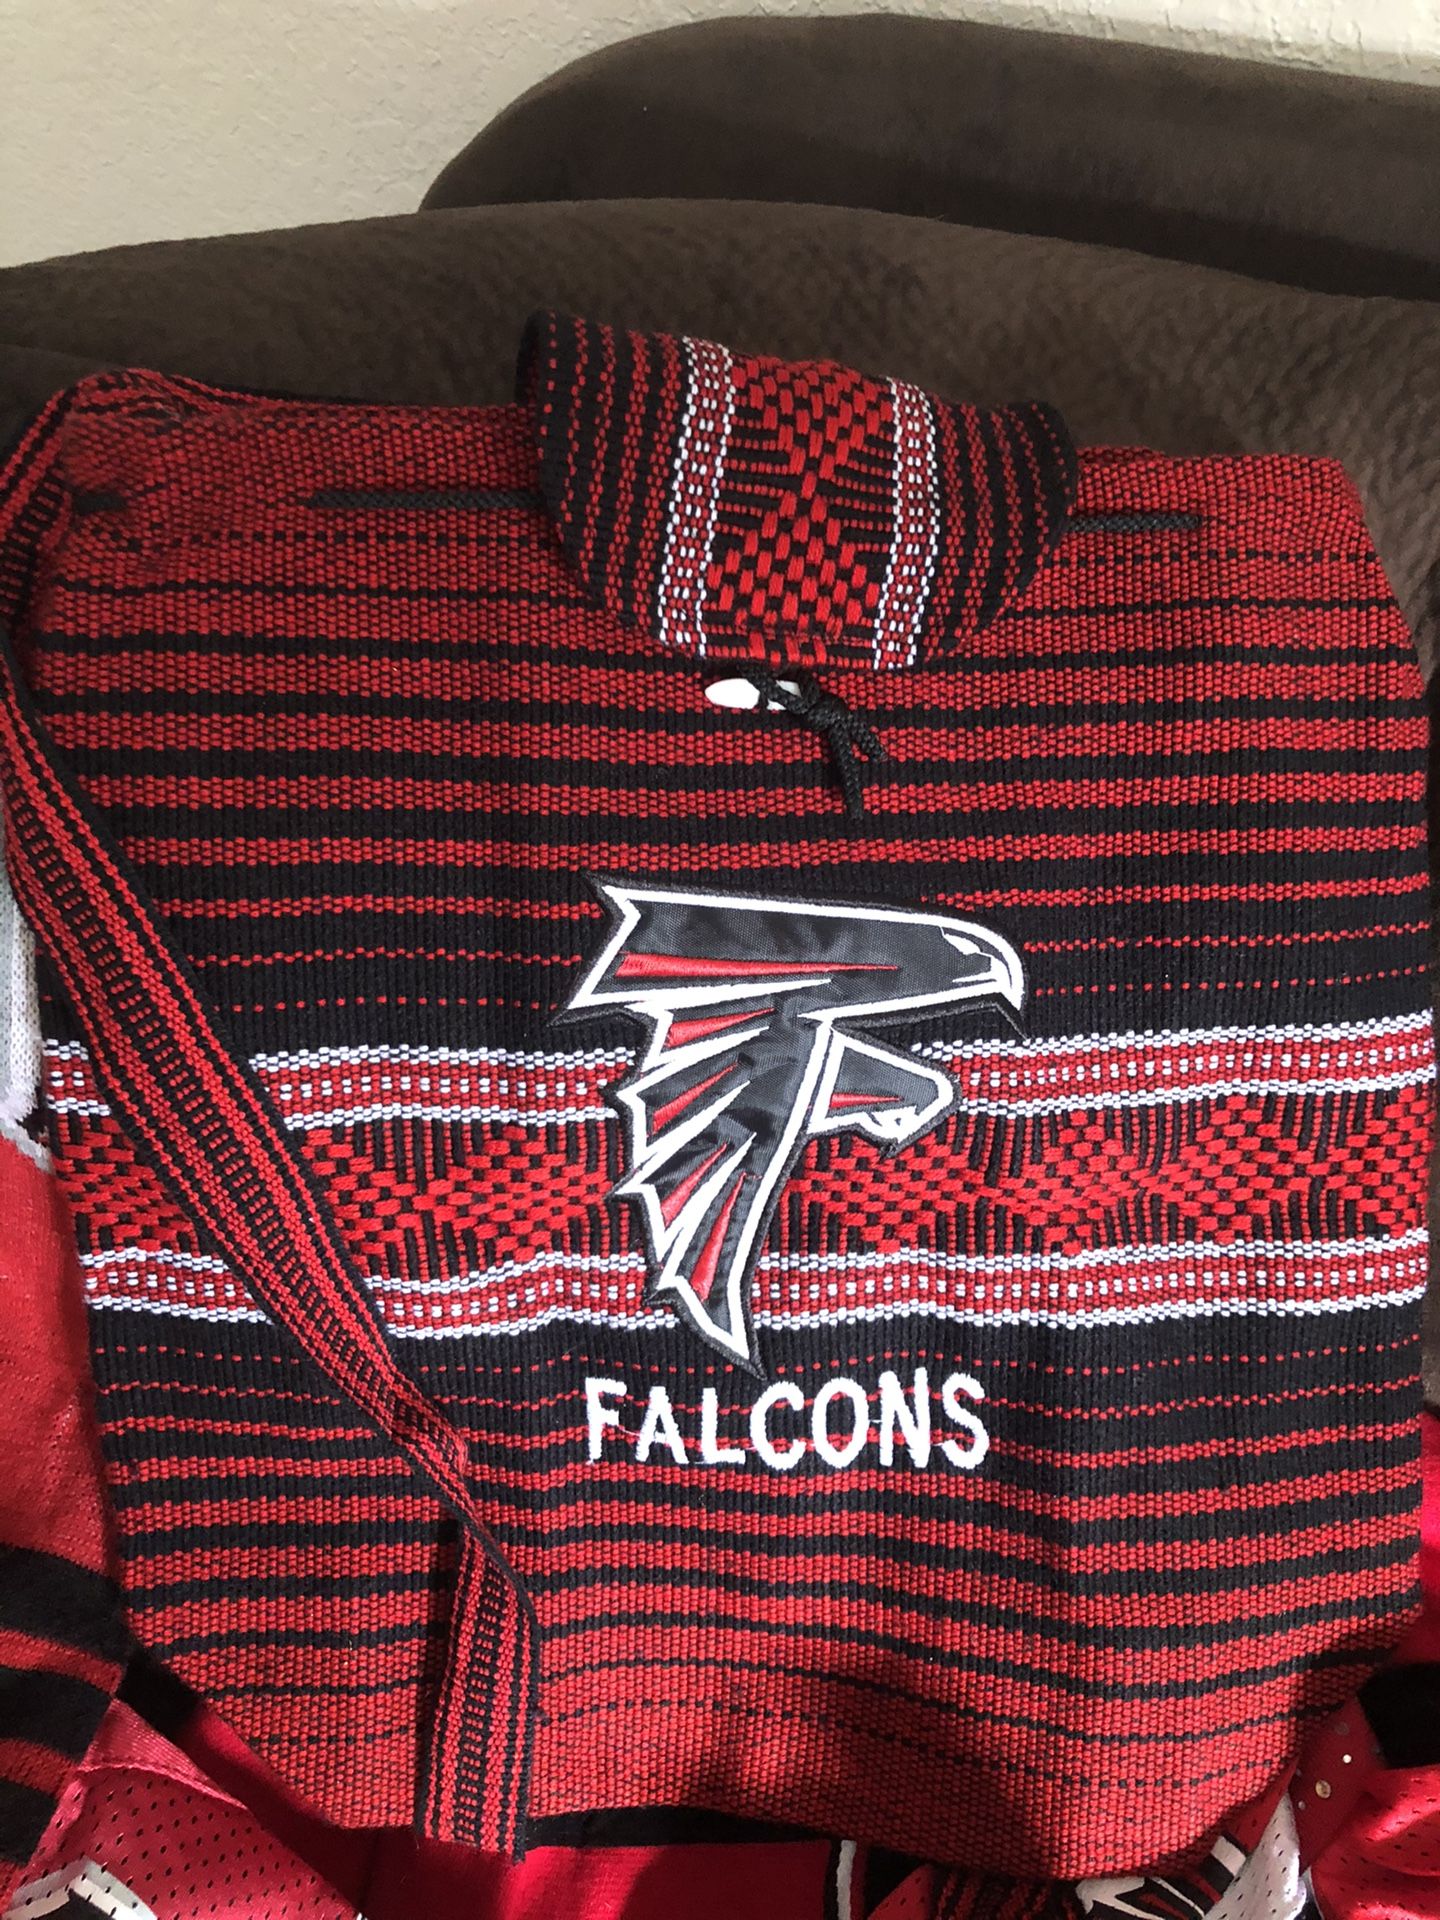 Atlanta Falcons backpack.